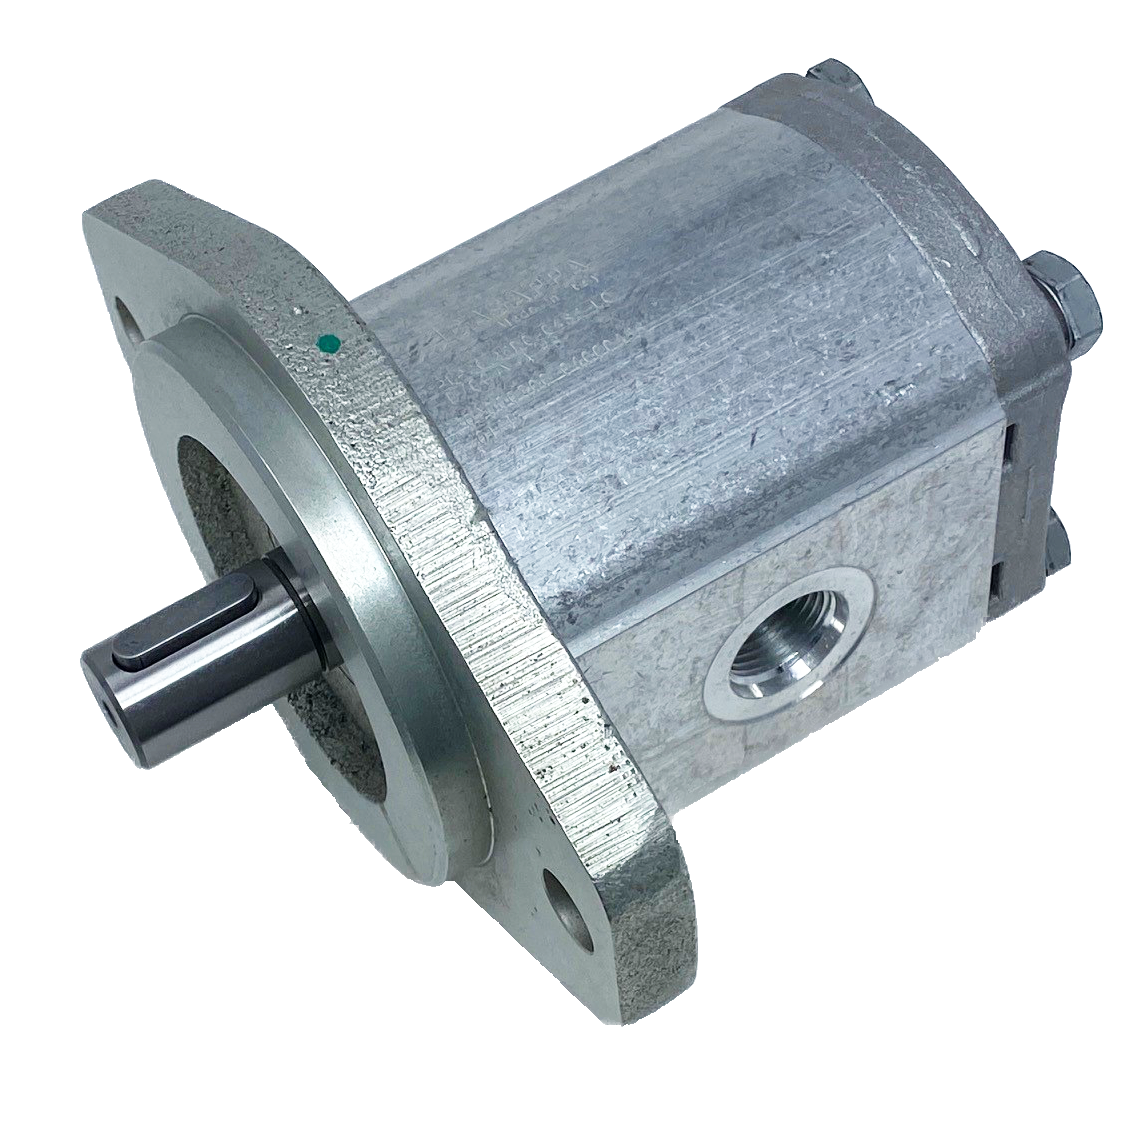 PLM20.16B0-32S5-LOC/OD-N-L : Casappa Polaris Gear Motor, 16.85cc, 3625psi Rated, 3000RPM, Reversible Interior Drain, 3/4" Bore x 1/4" Key Shaft, SAE B 2-Bolt Flange, 0.625 (5/8") #10 SAE Inlet, 0.75 (3/4") #12 SAE Outlet, Aluminum Body, Cast Iron Flange